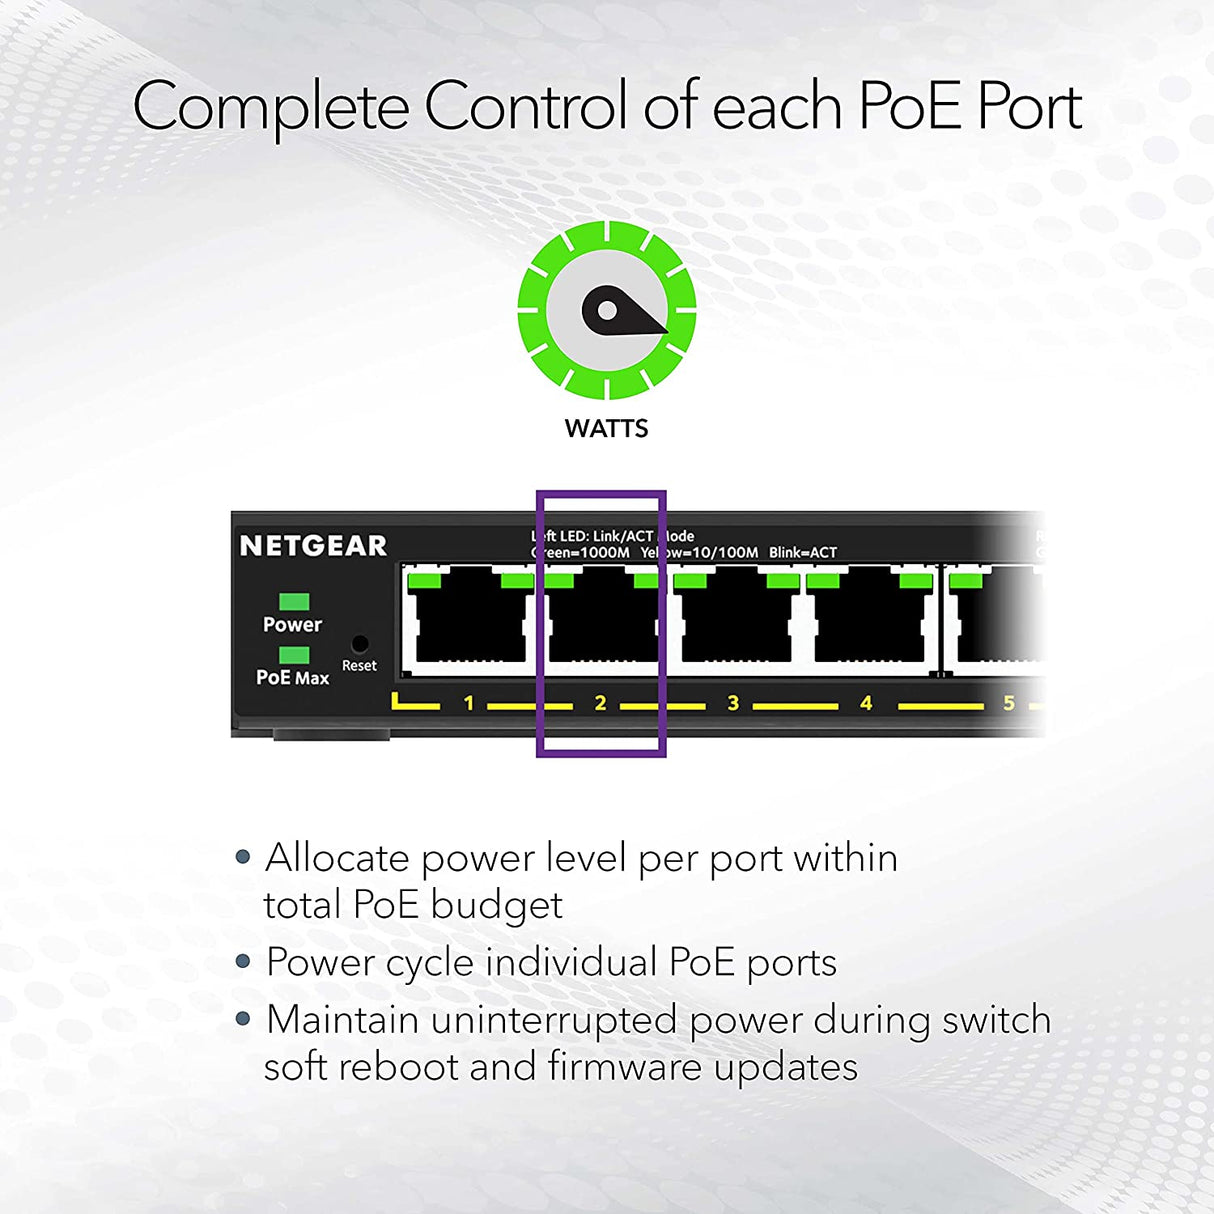 NETGEAR 8 Port PoE Gigabit Ethernet Plus Switch (GS308EP) - with 8 x PoE+ @ 62W, Desktop or Wall Mount Plus 8 Port | 8xPoE+ 62W